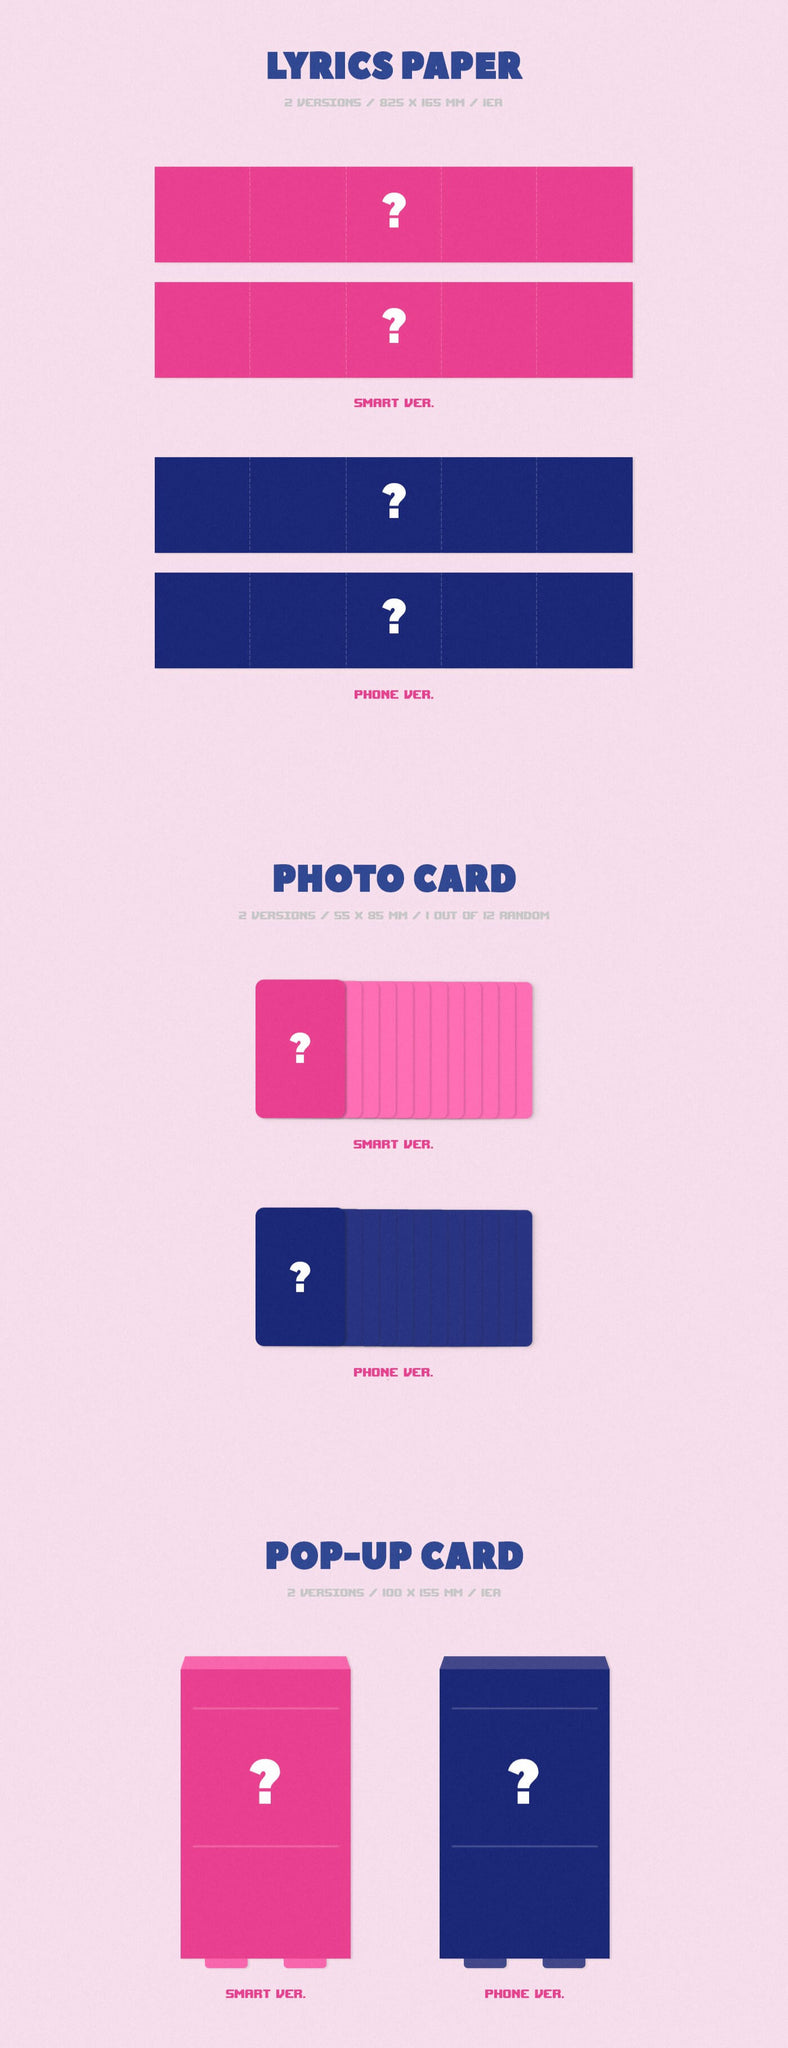 Yena 2nd Mini Album SMARTPHONE Inclusions Lyrics Paper Photocard Pop-up Card